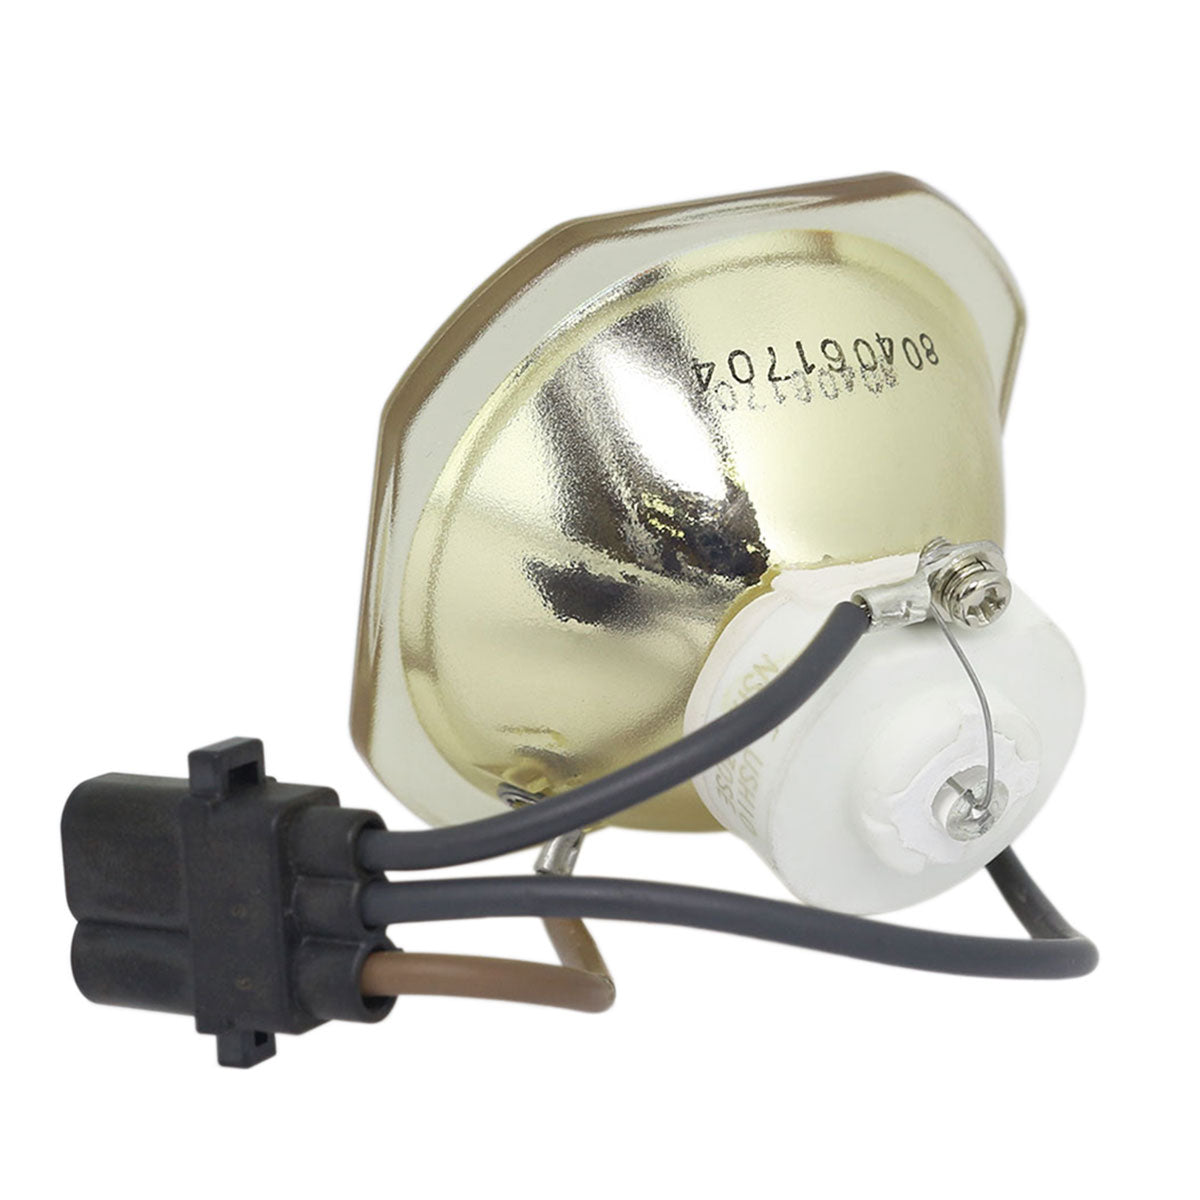 Epson ELPLP45 Ushio Projector Bare Lamp